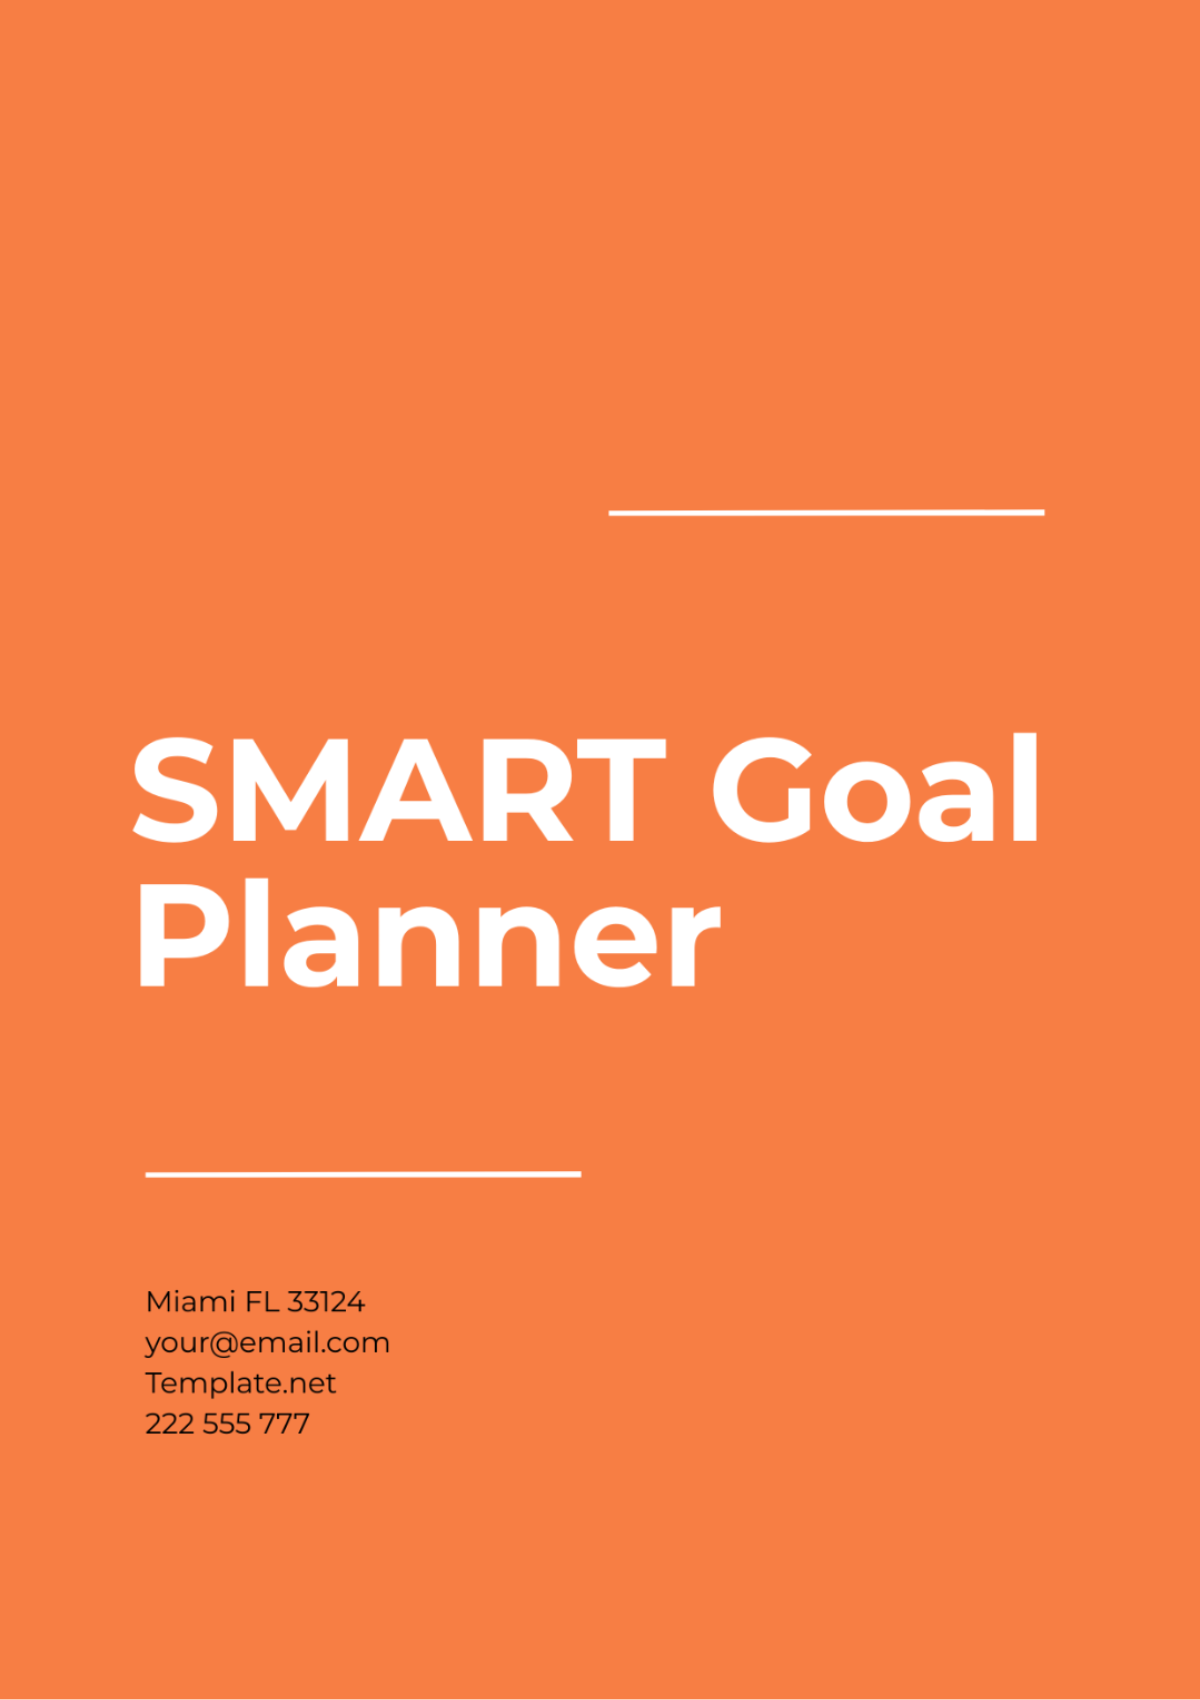 SMART Goal Planner Template